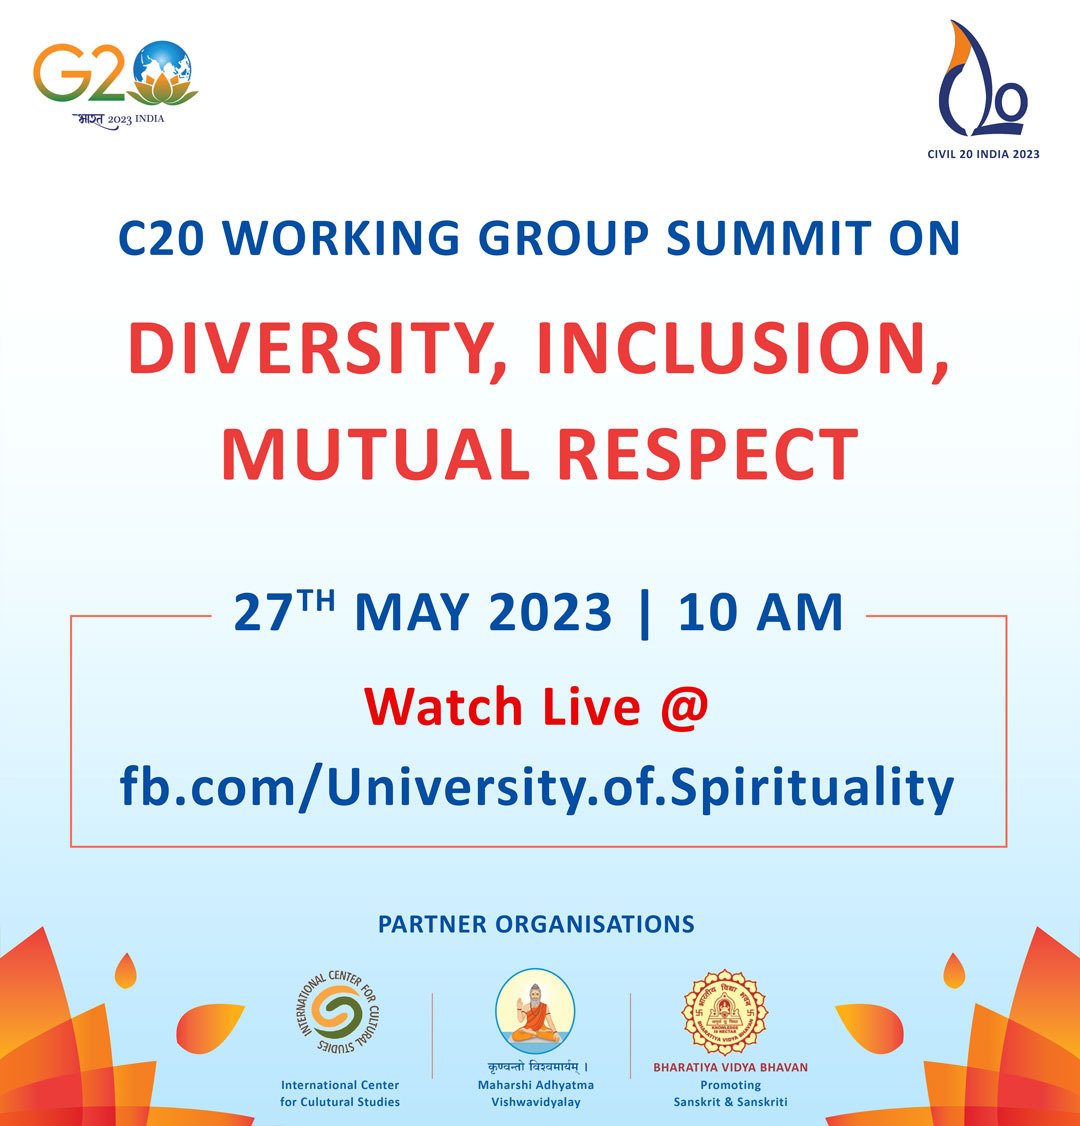 #C20 working group summit on 'DIVERSITY, INCLUSION, MUTUAL RESPECT'
#MAV
#G20Summit2023 #C20Summit